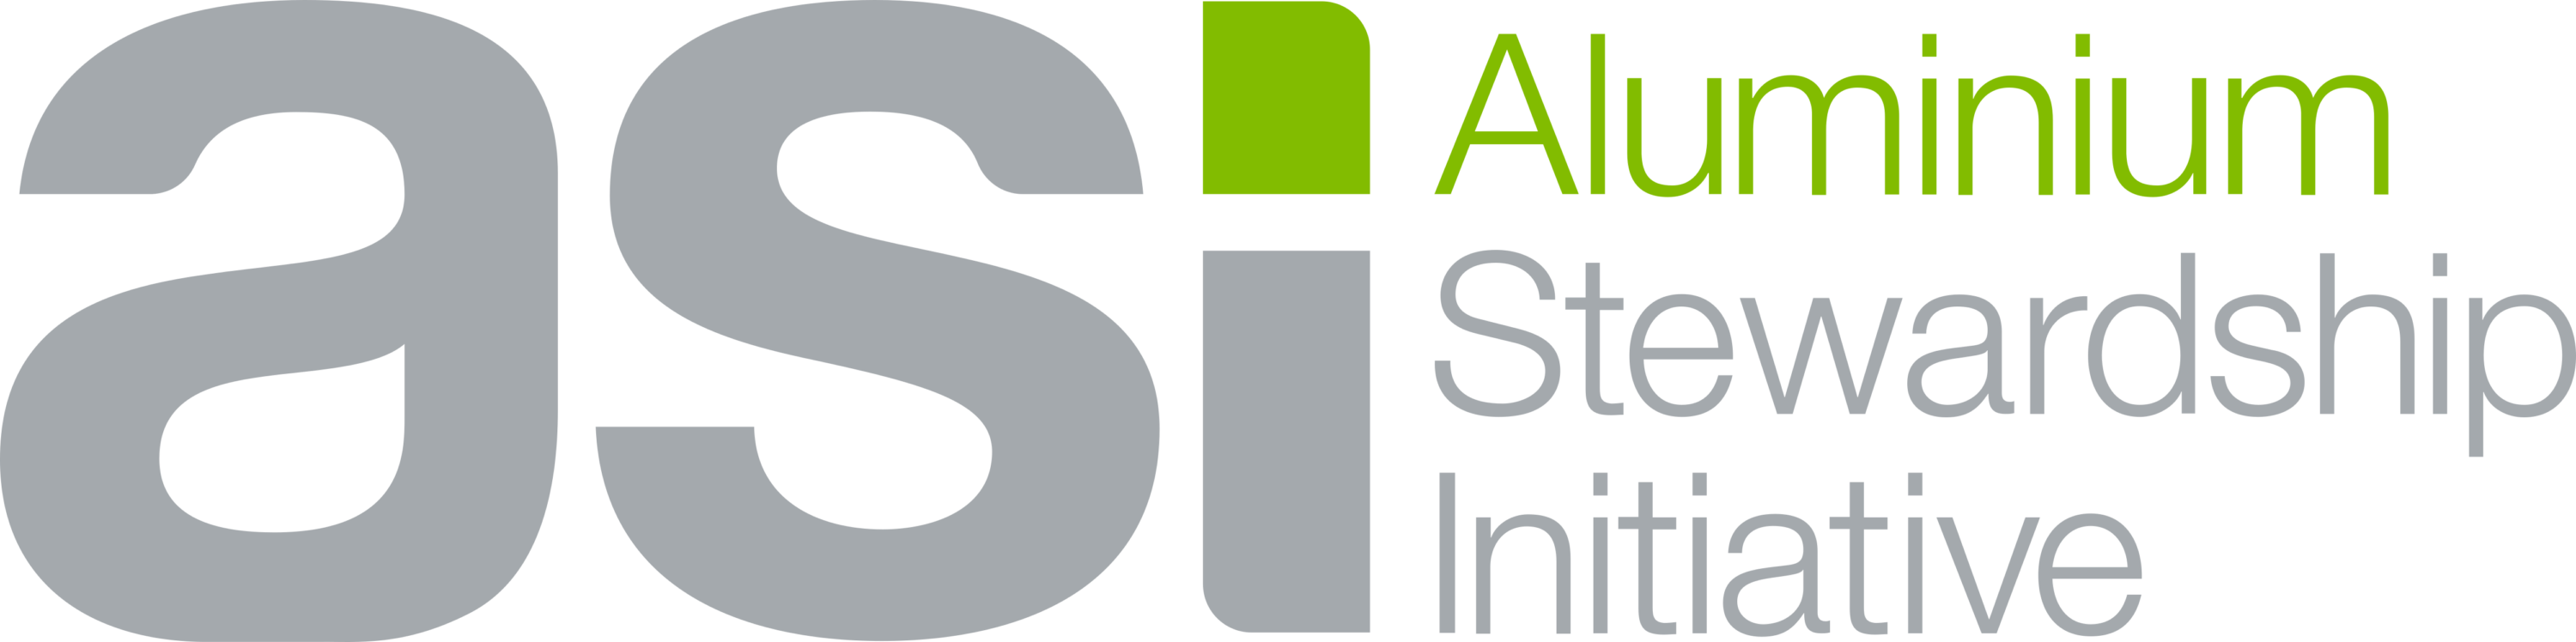 Aluminium Stewardship Initiative Logo